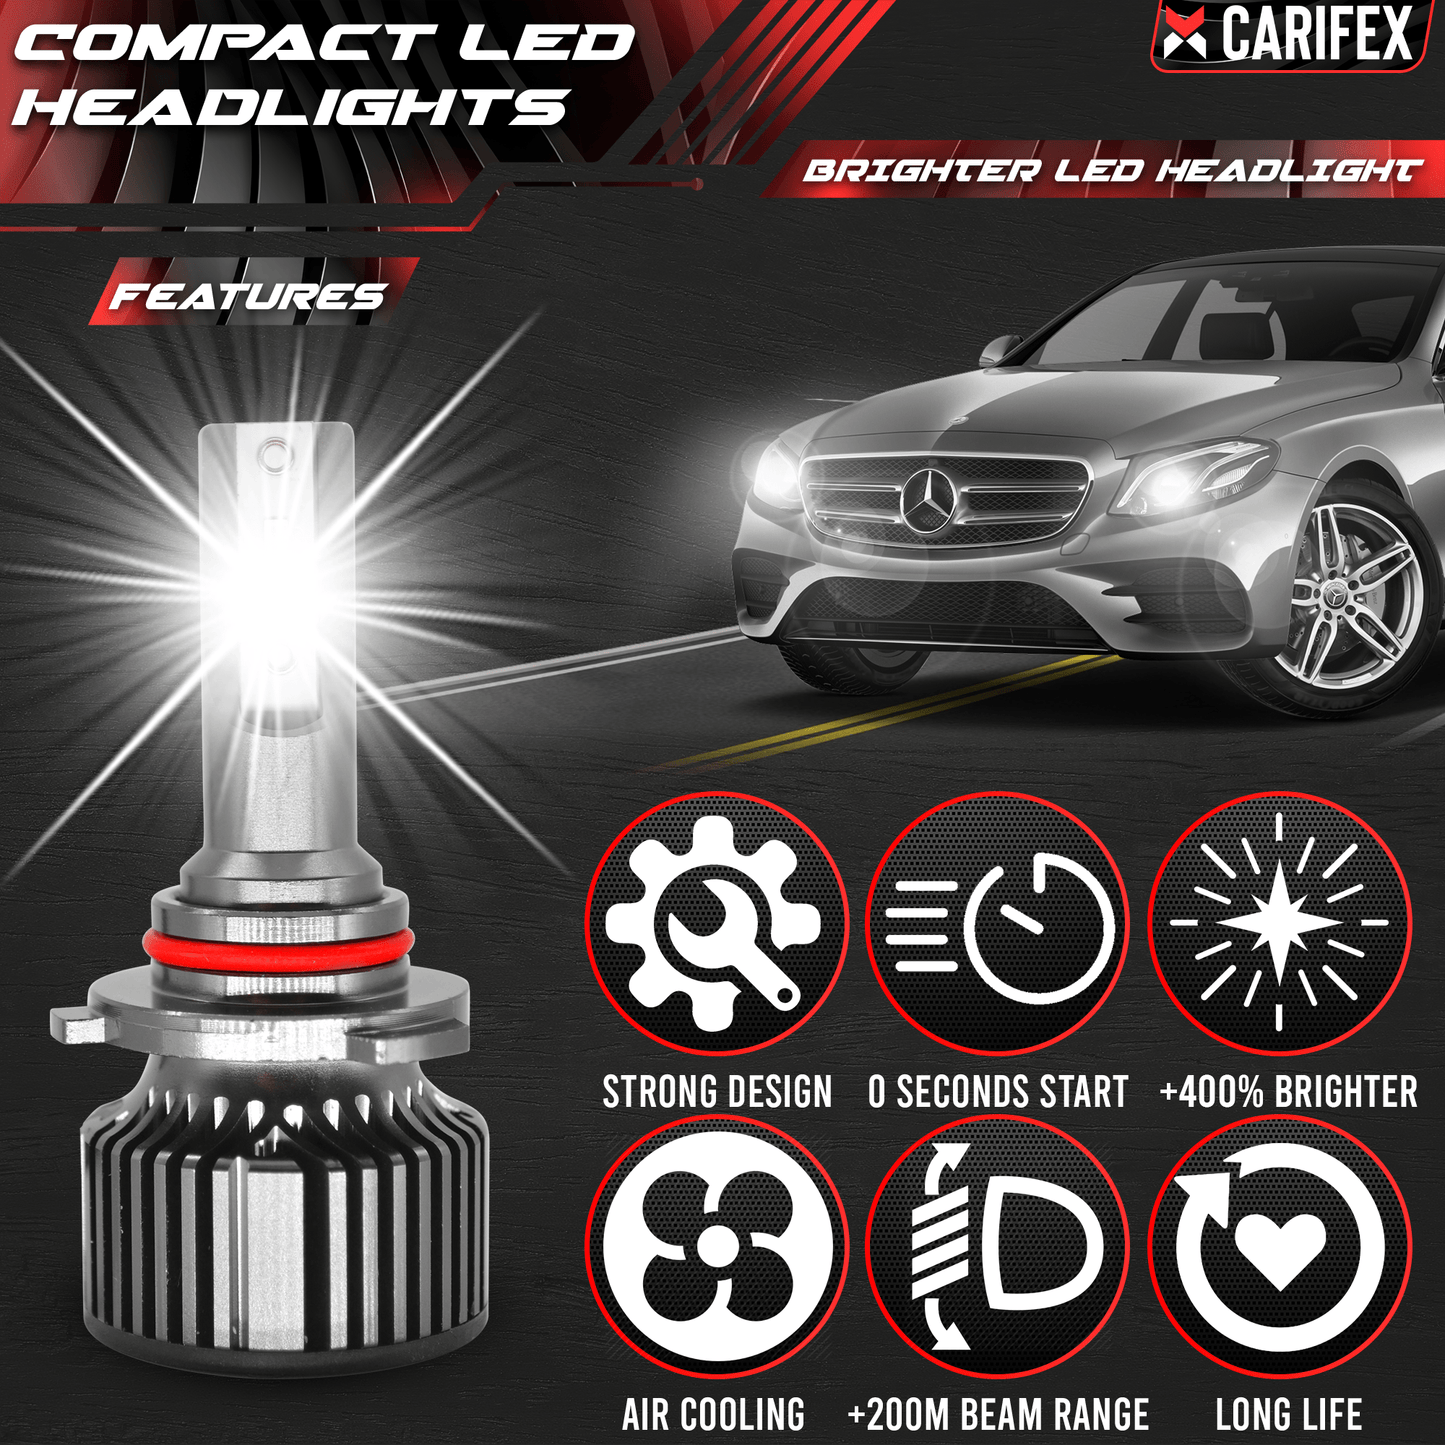 Carifex headlights bulb Premium LED Headlight - 9005